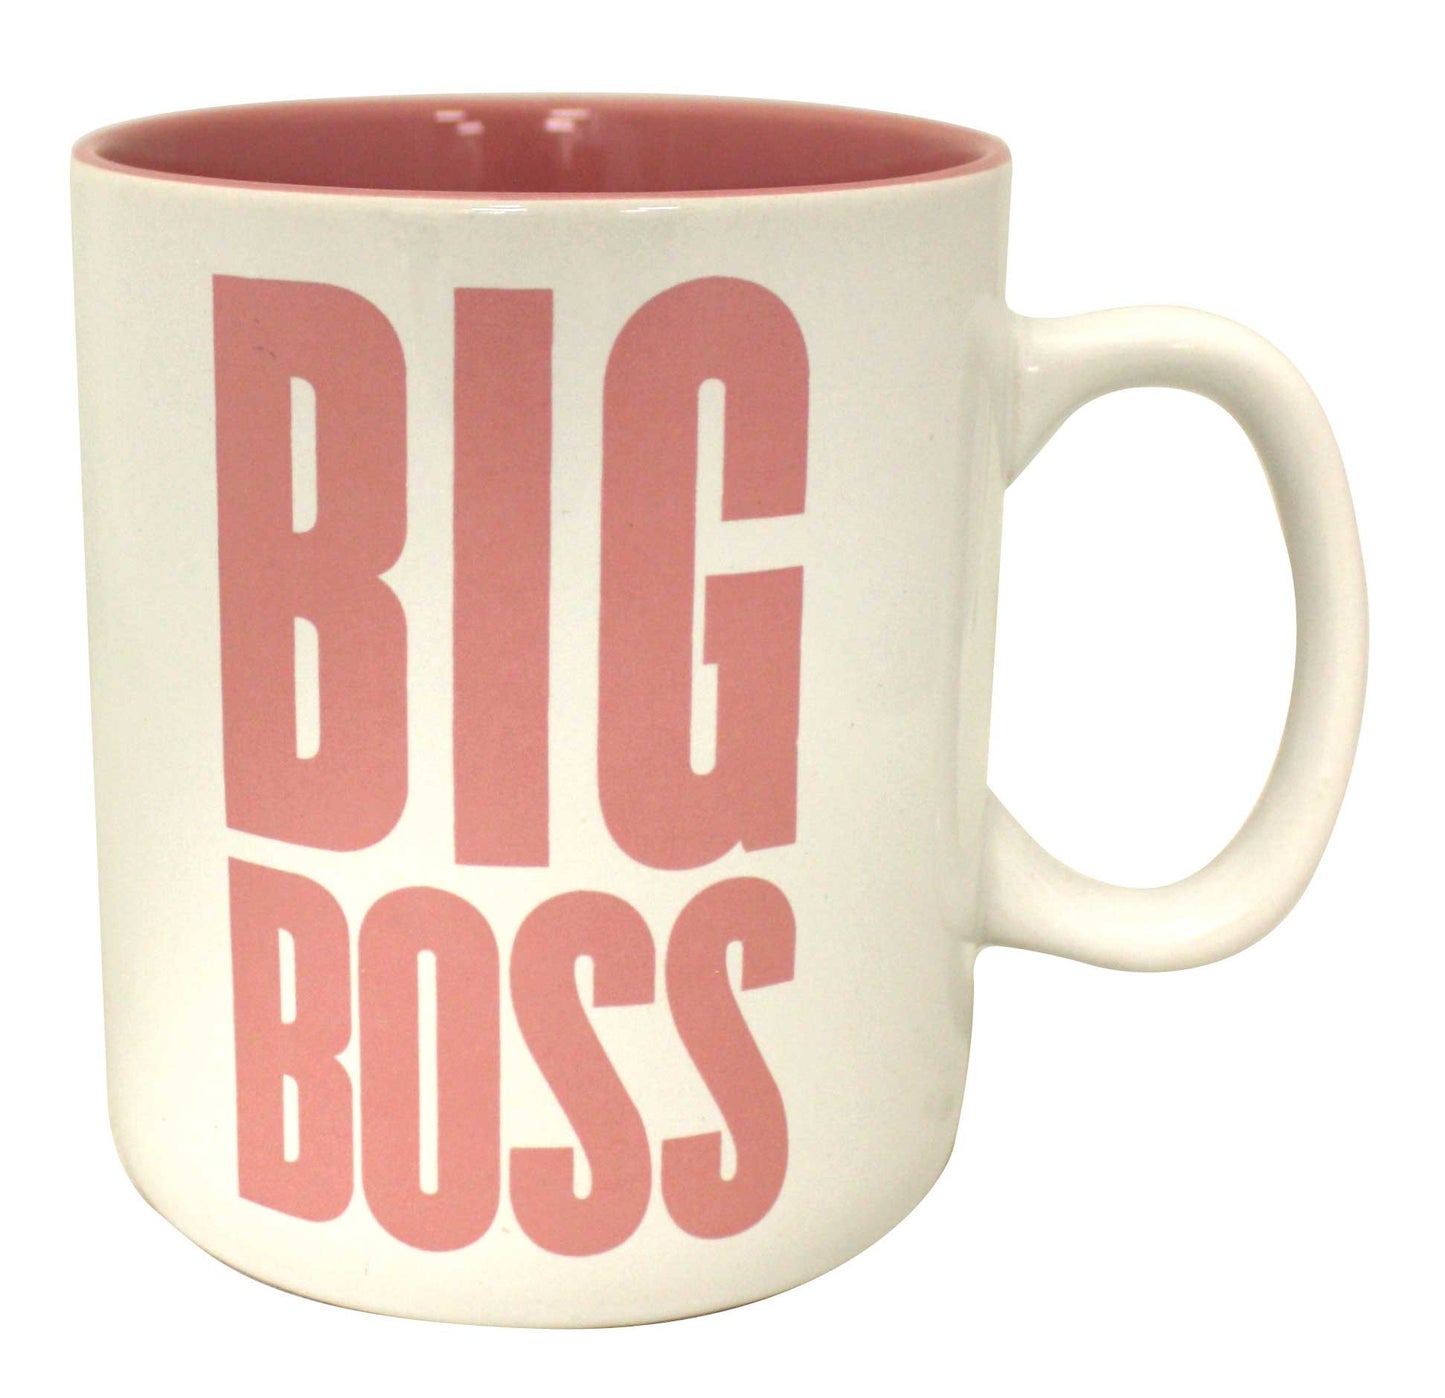 Big Boss 30 oz Mug - Pink